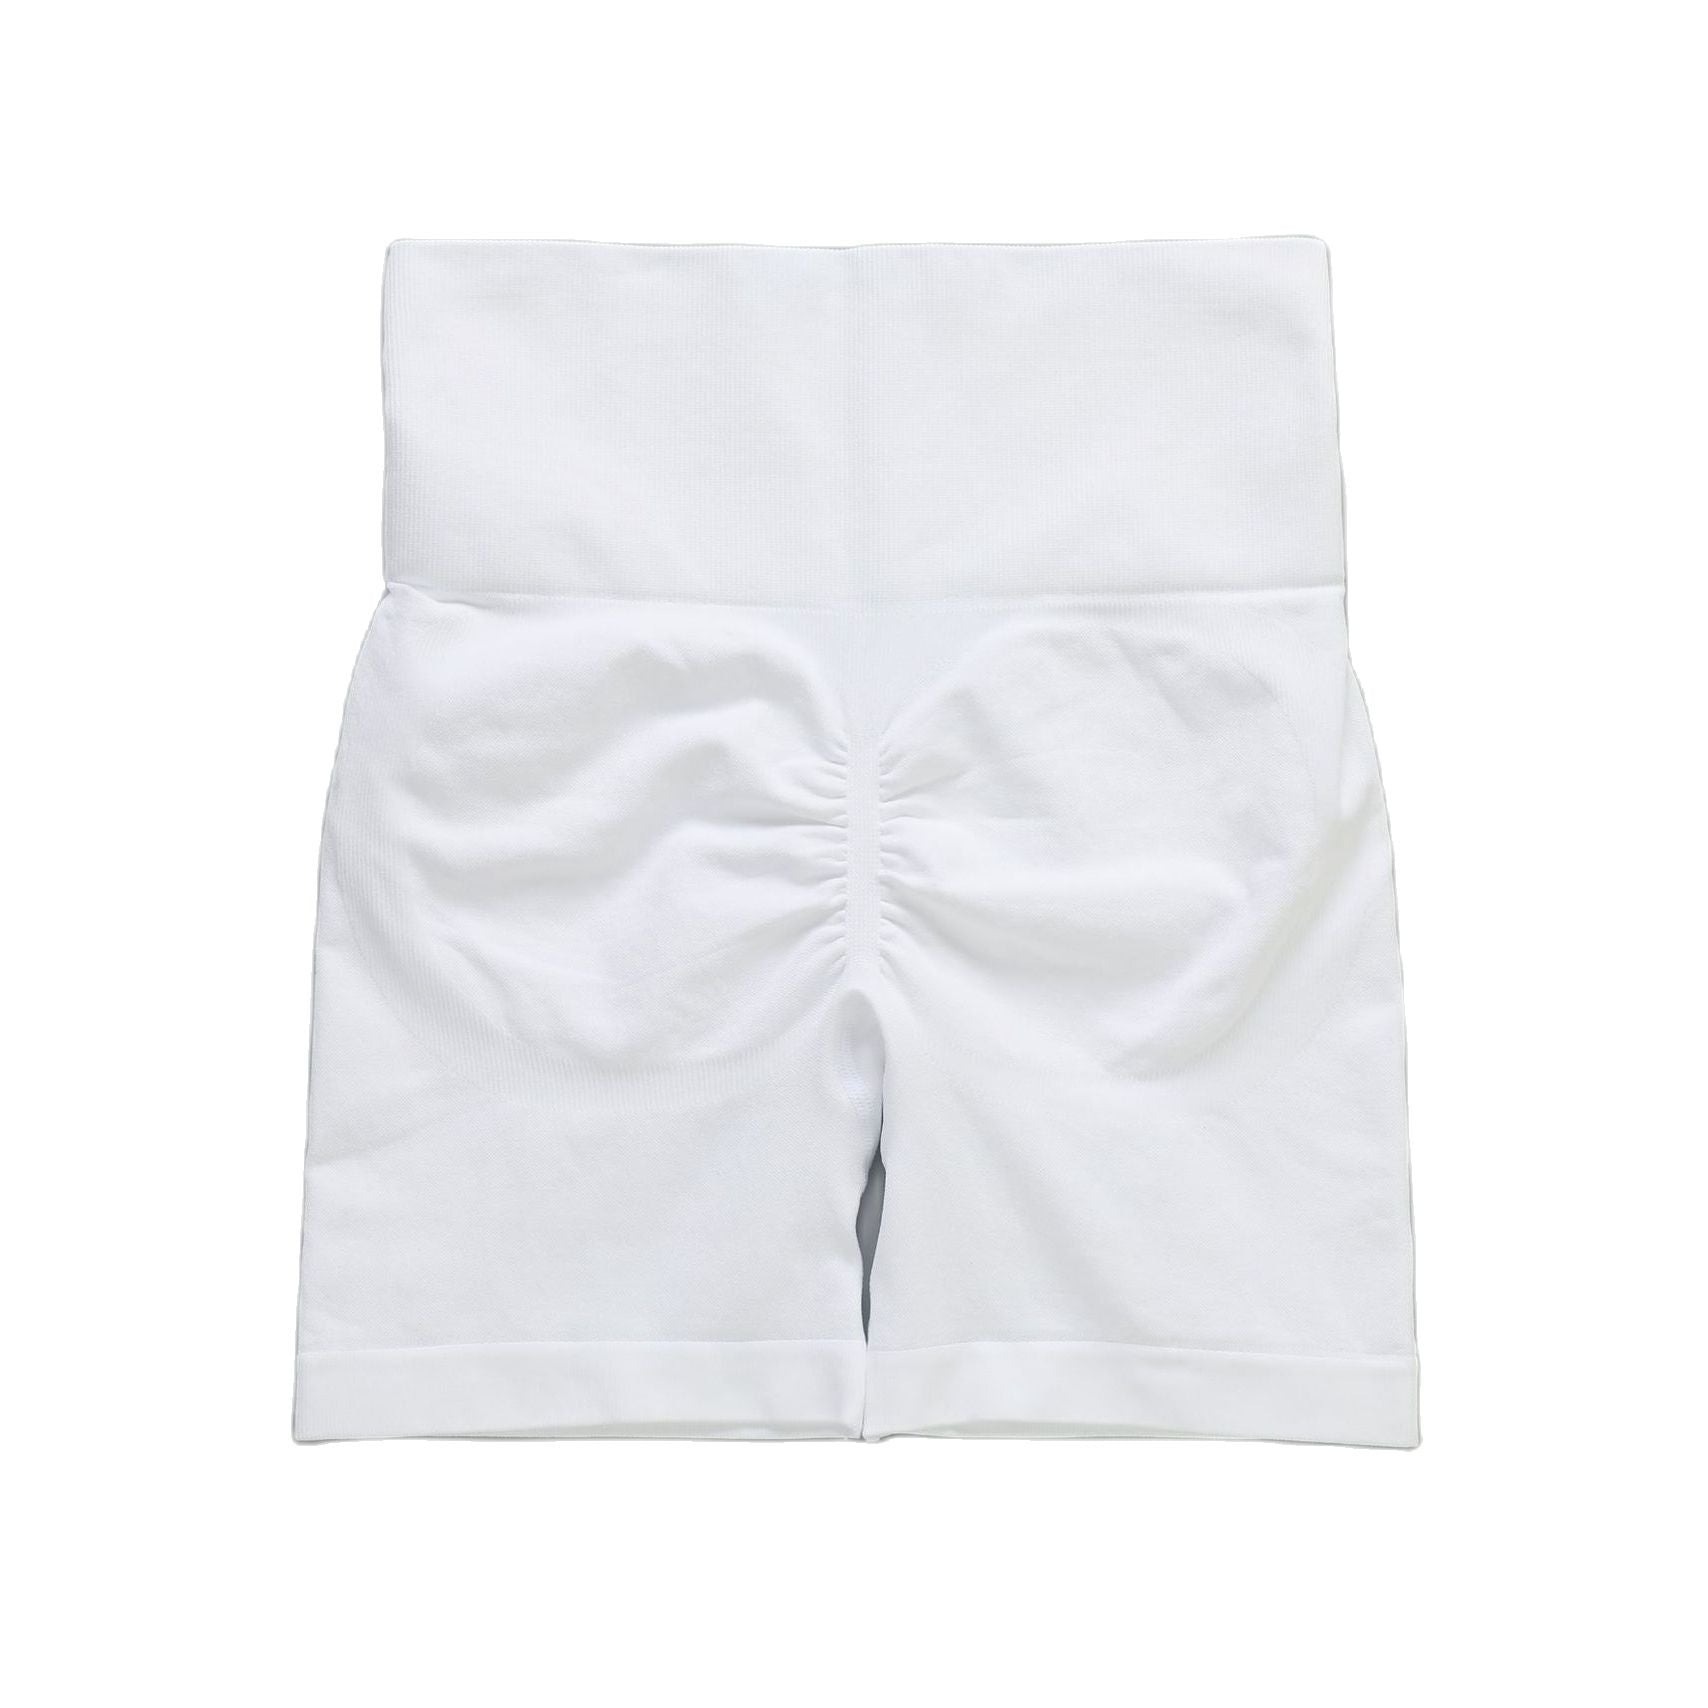 Women GYM Shorts 2 pieces Set White Shorts